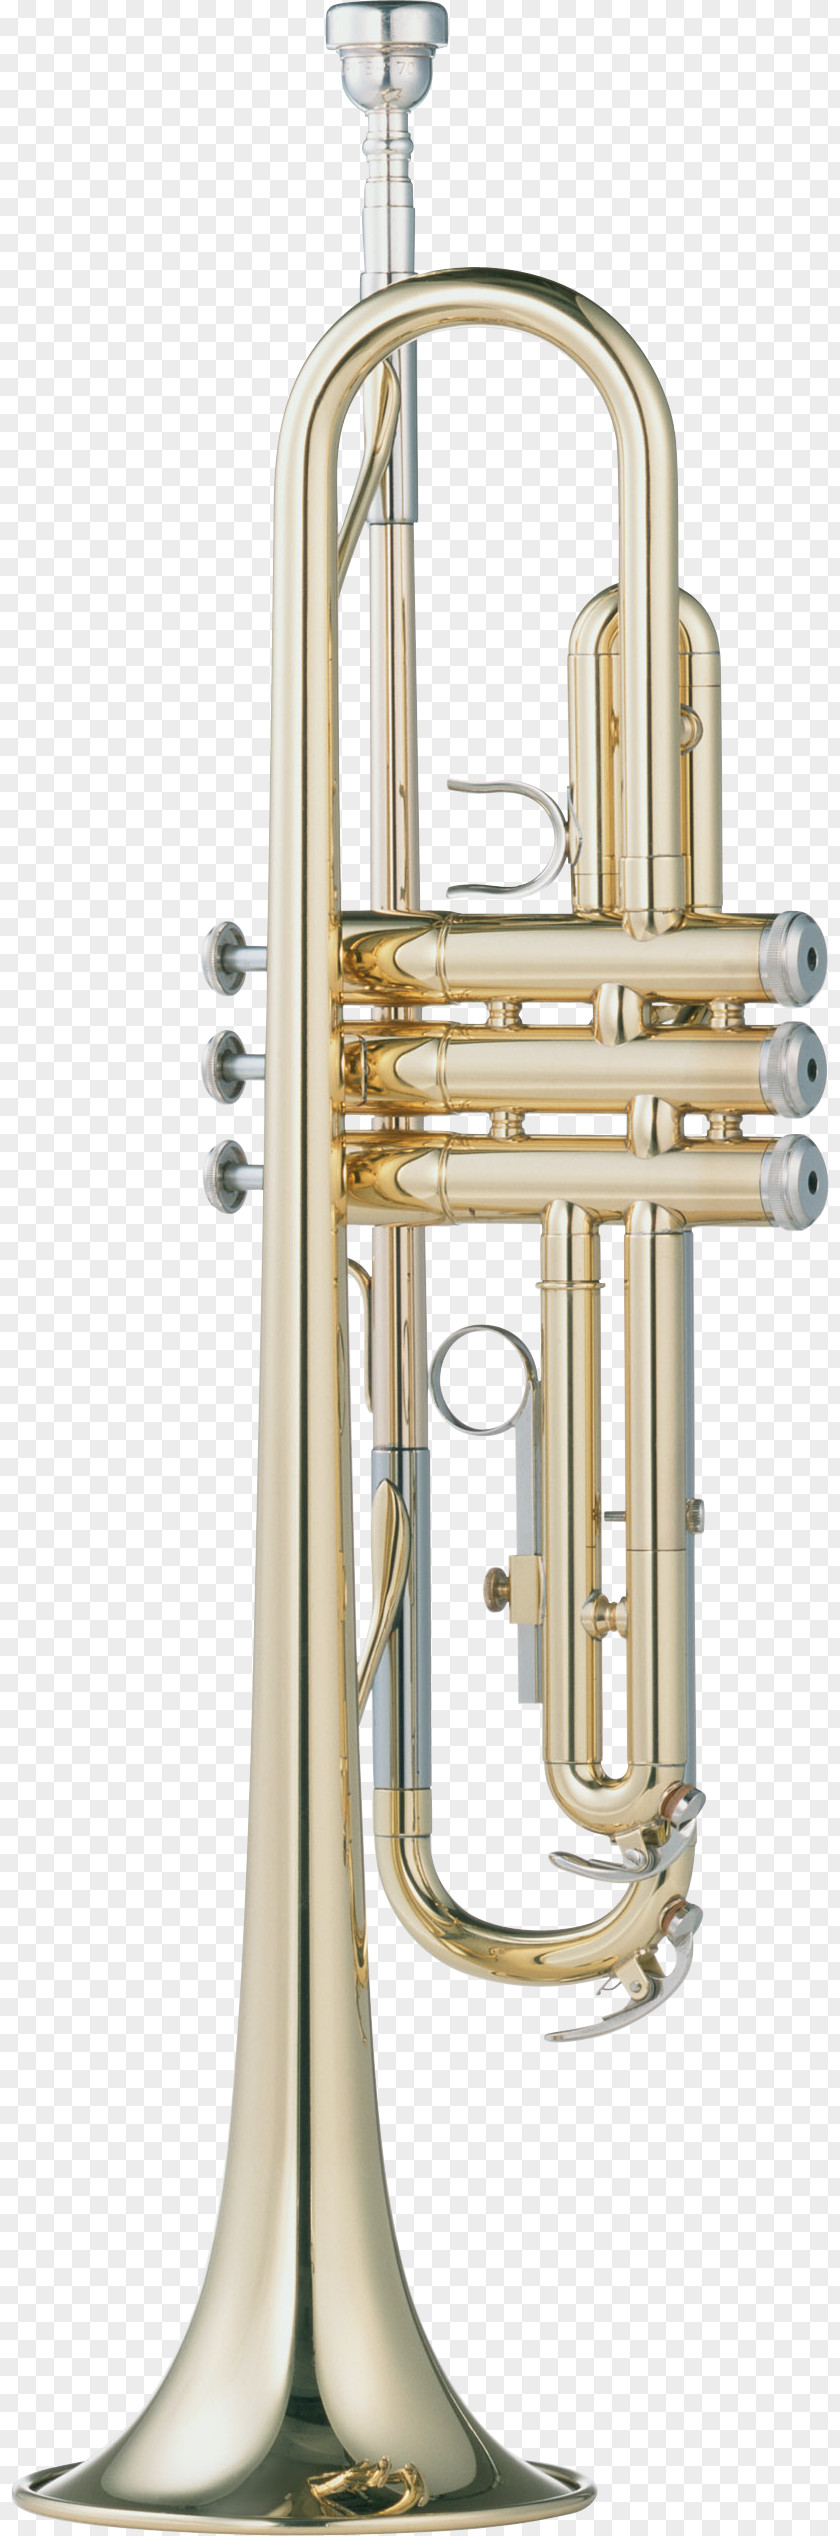 Musical Instruments Brass Trumpet Wind Instrument Trombone PNG